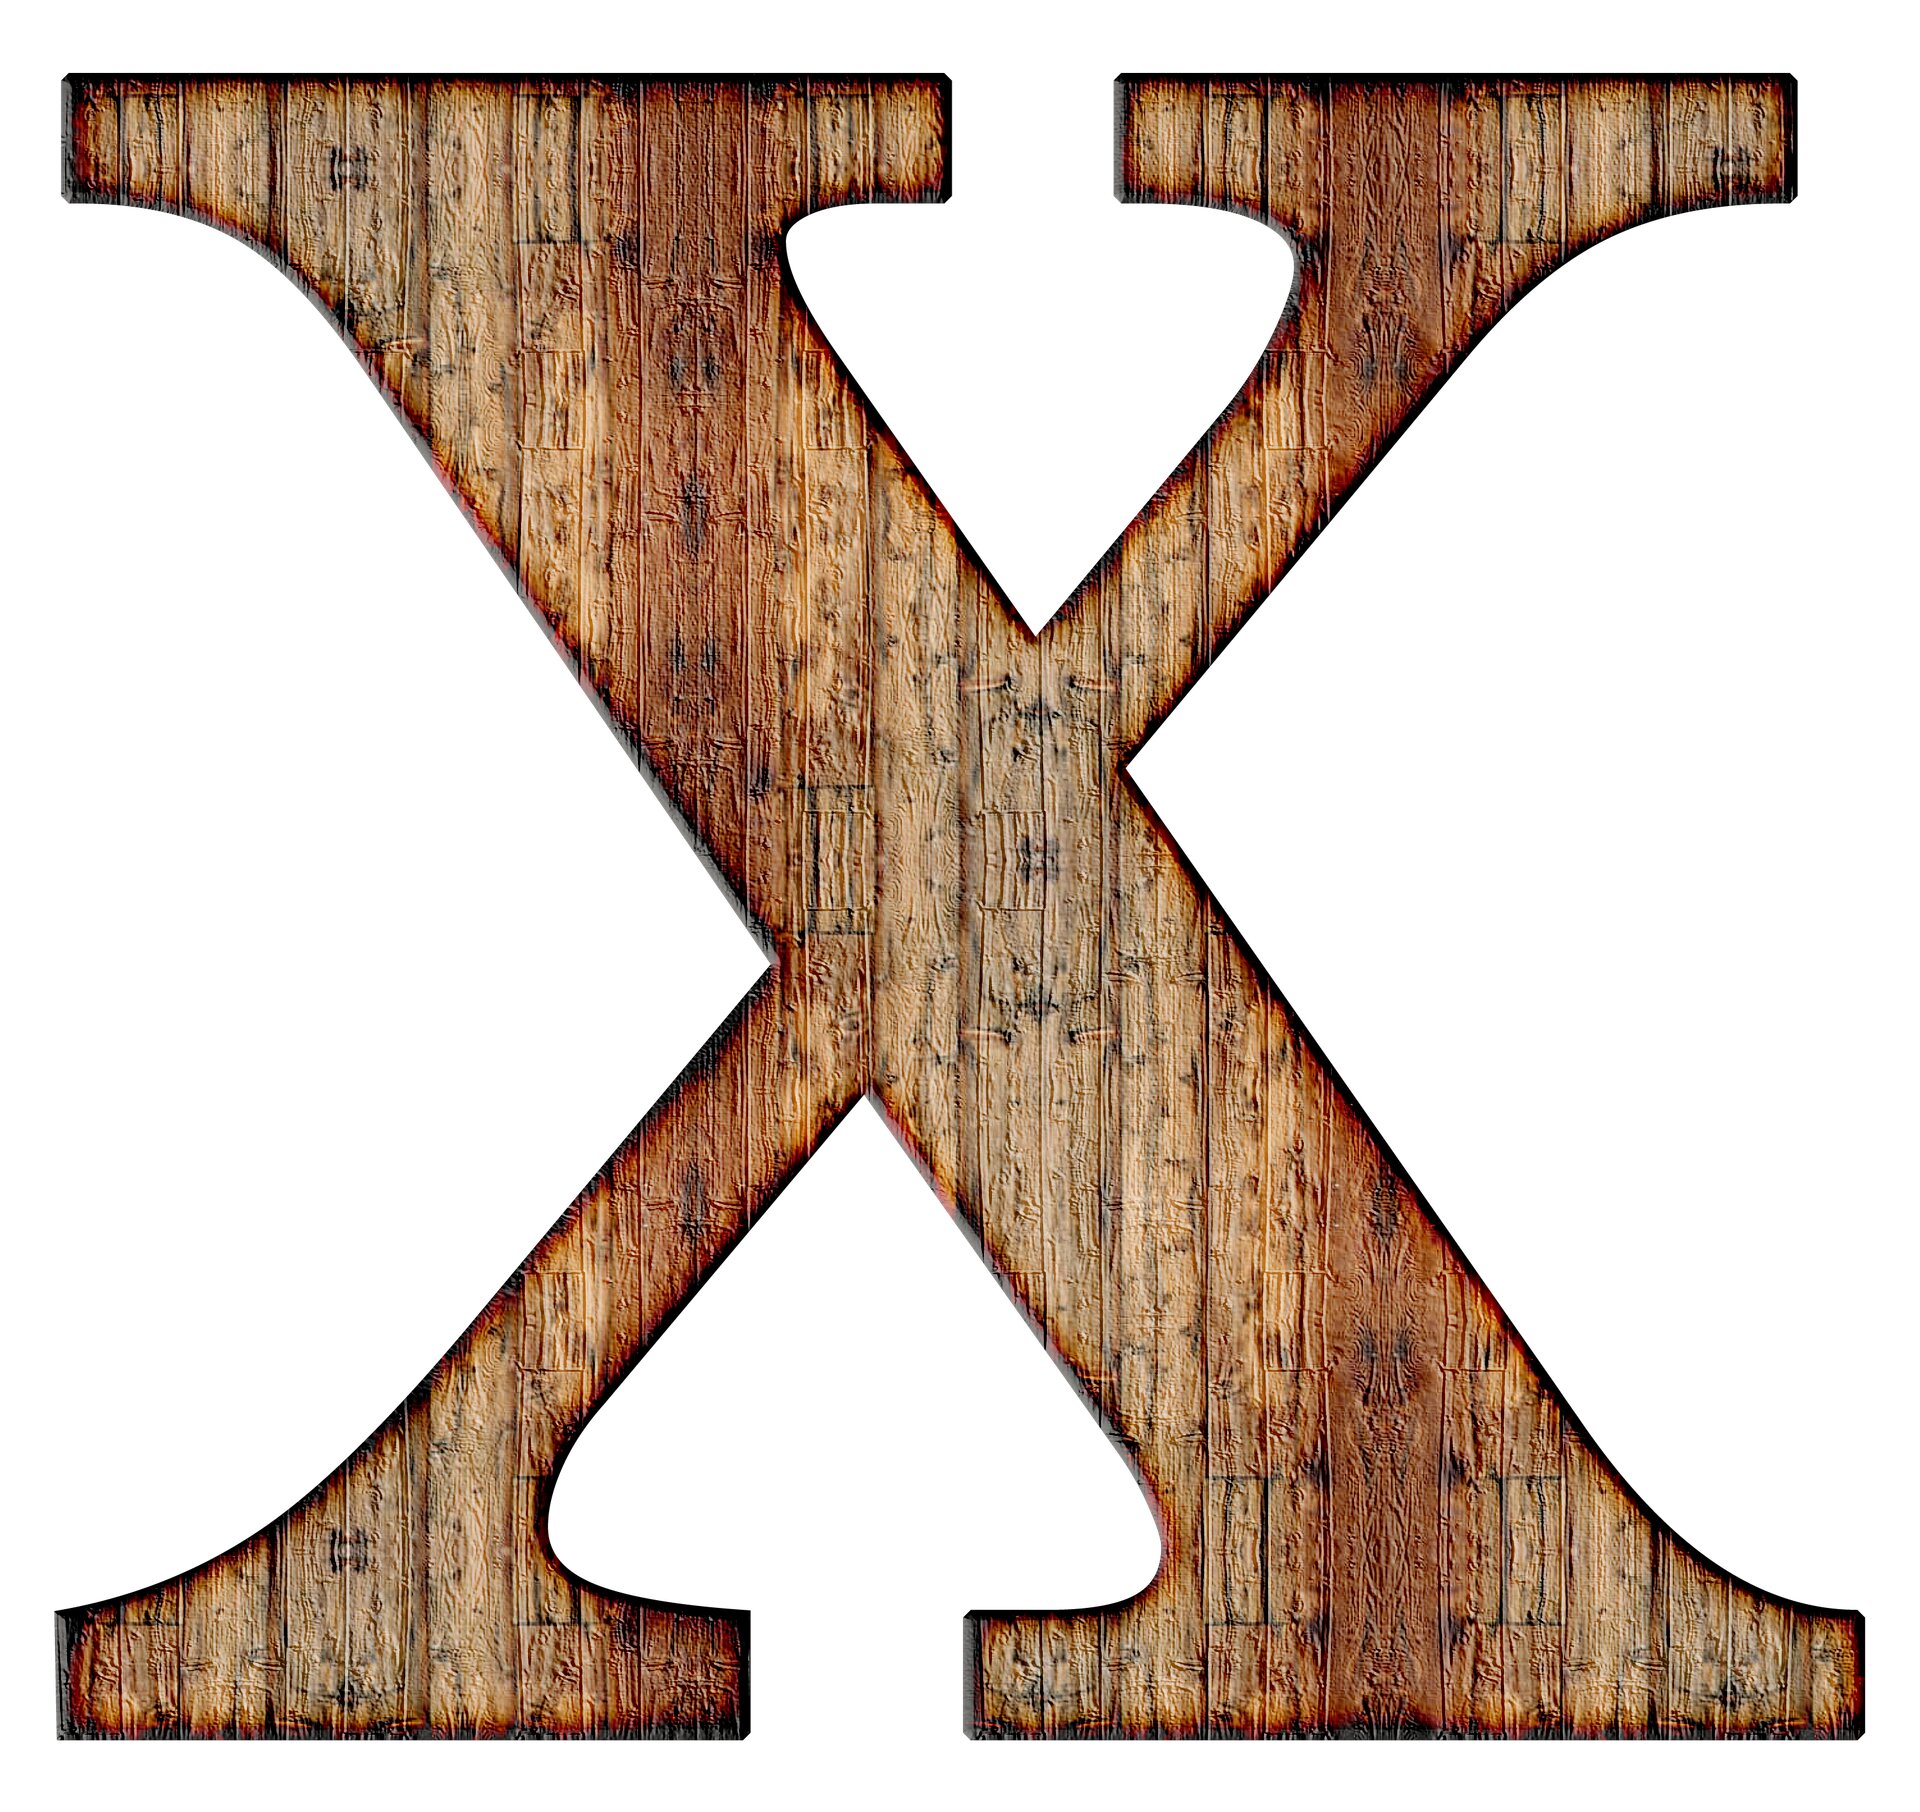 X在代数中表示未知，但是X的起源是一个数学谜